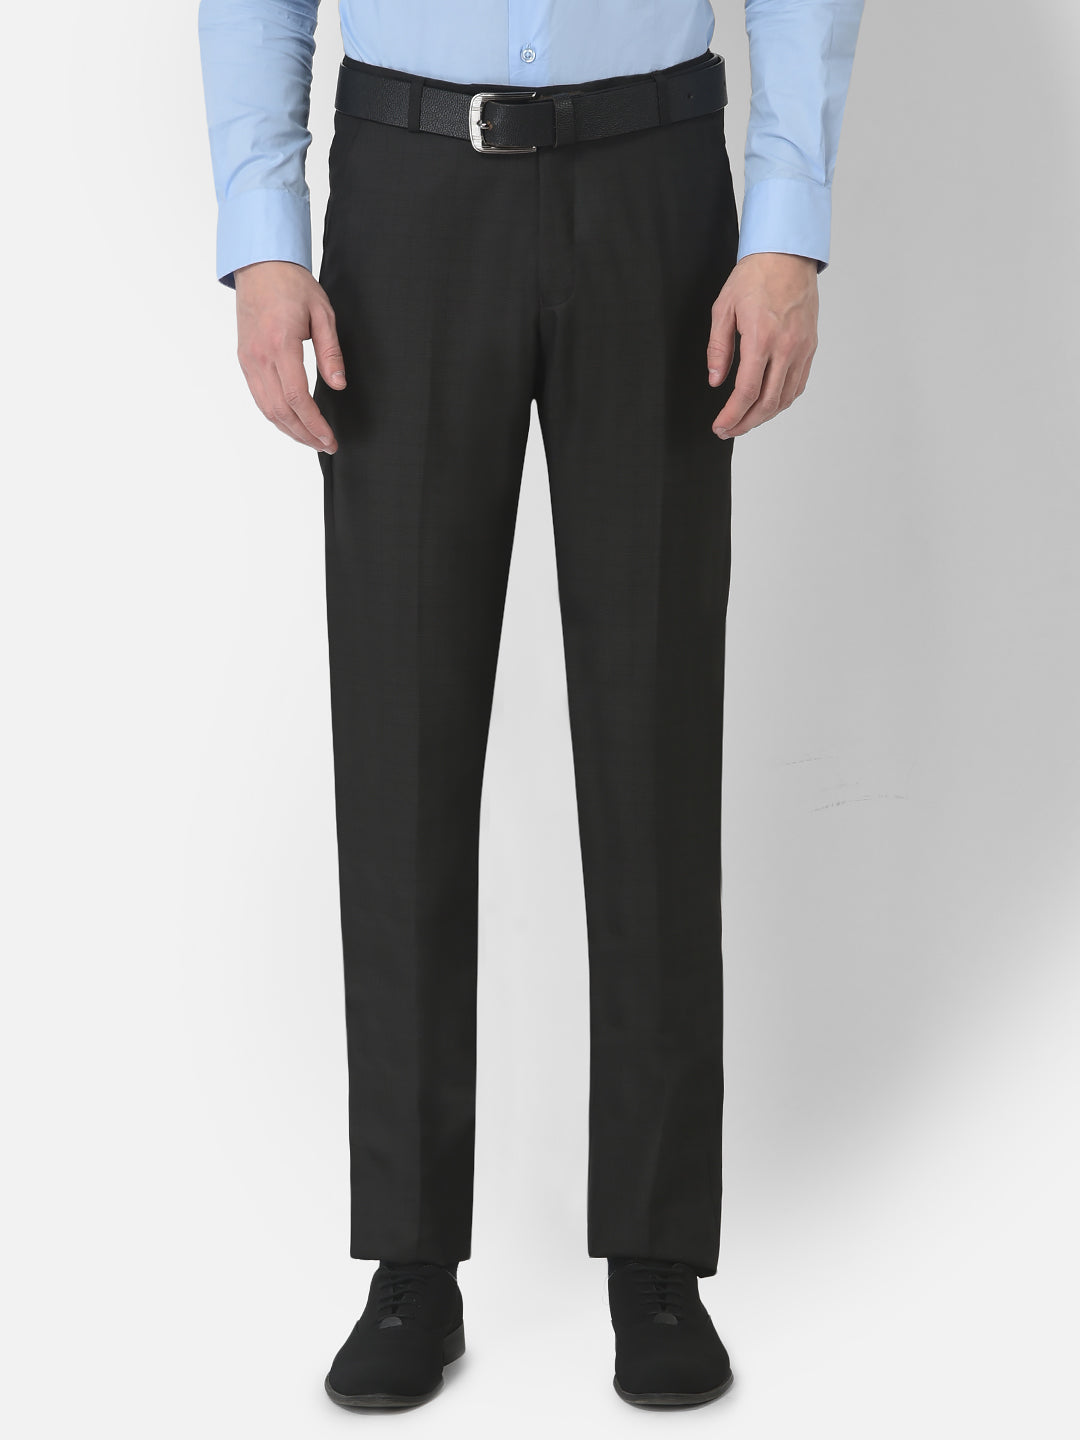 Buy Men Black Textured Slim Fit Formal Trousers Online  795952  Peter  England